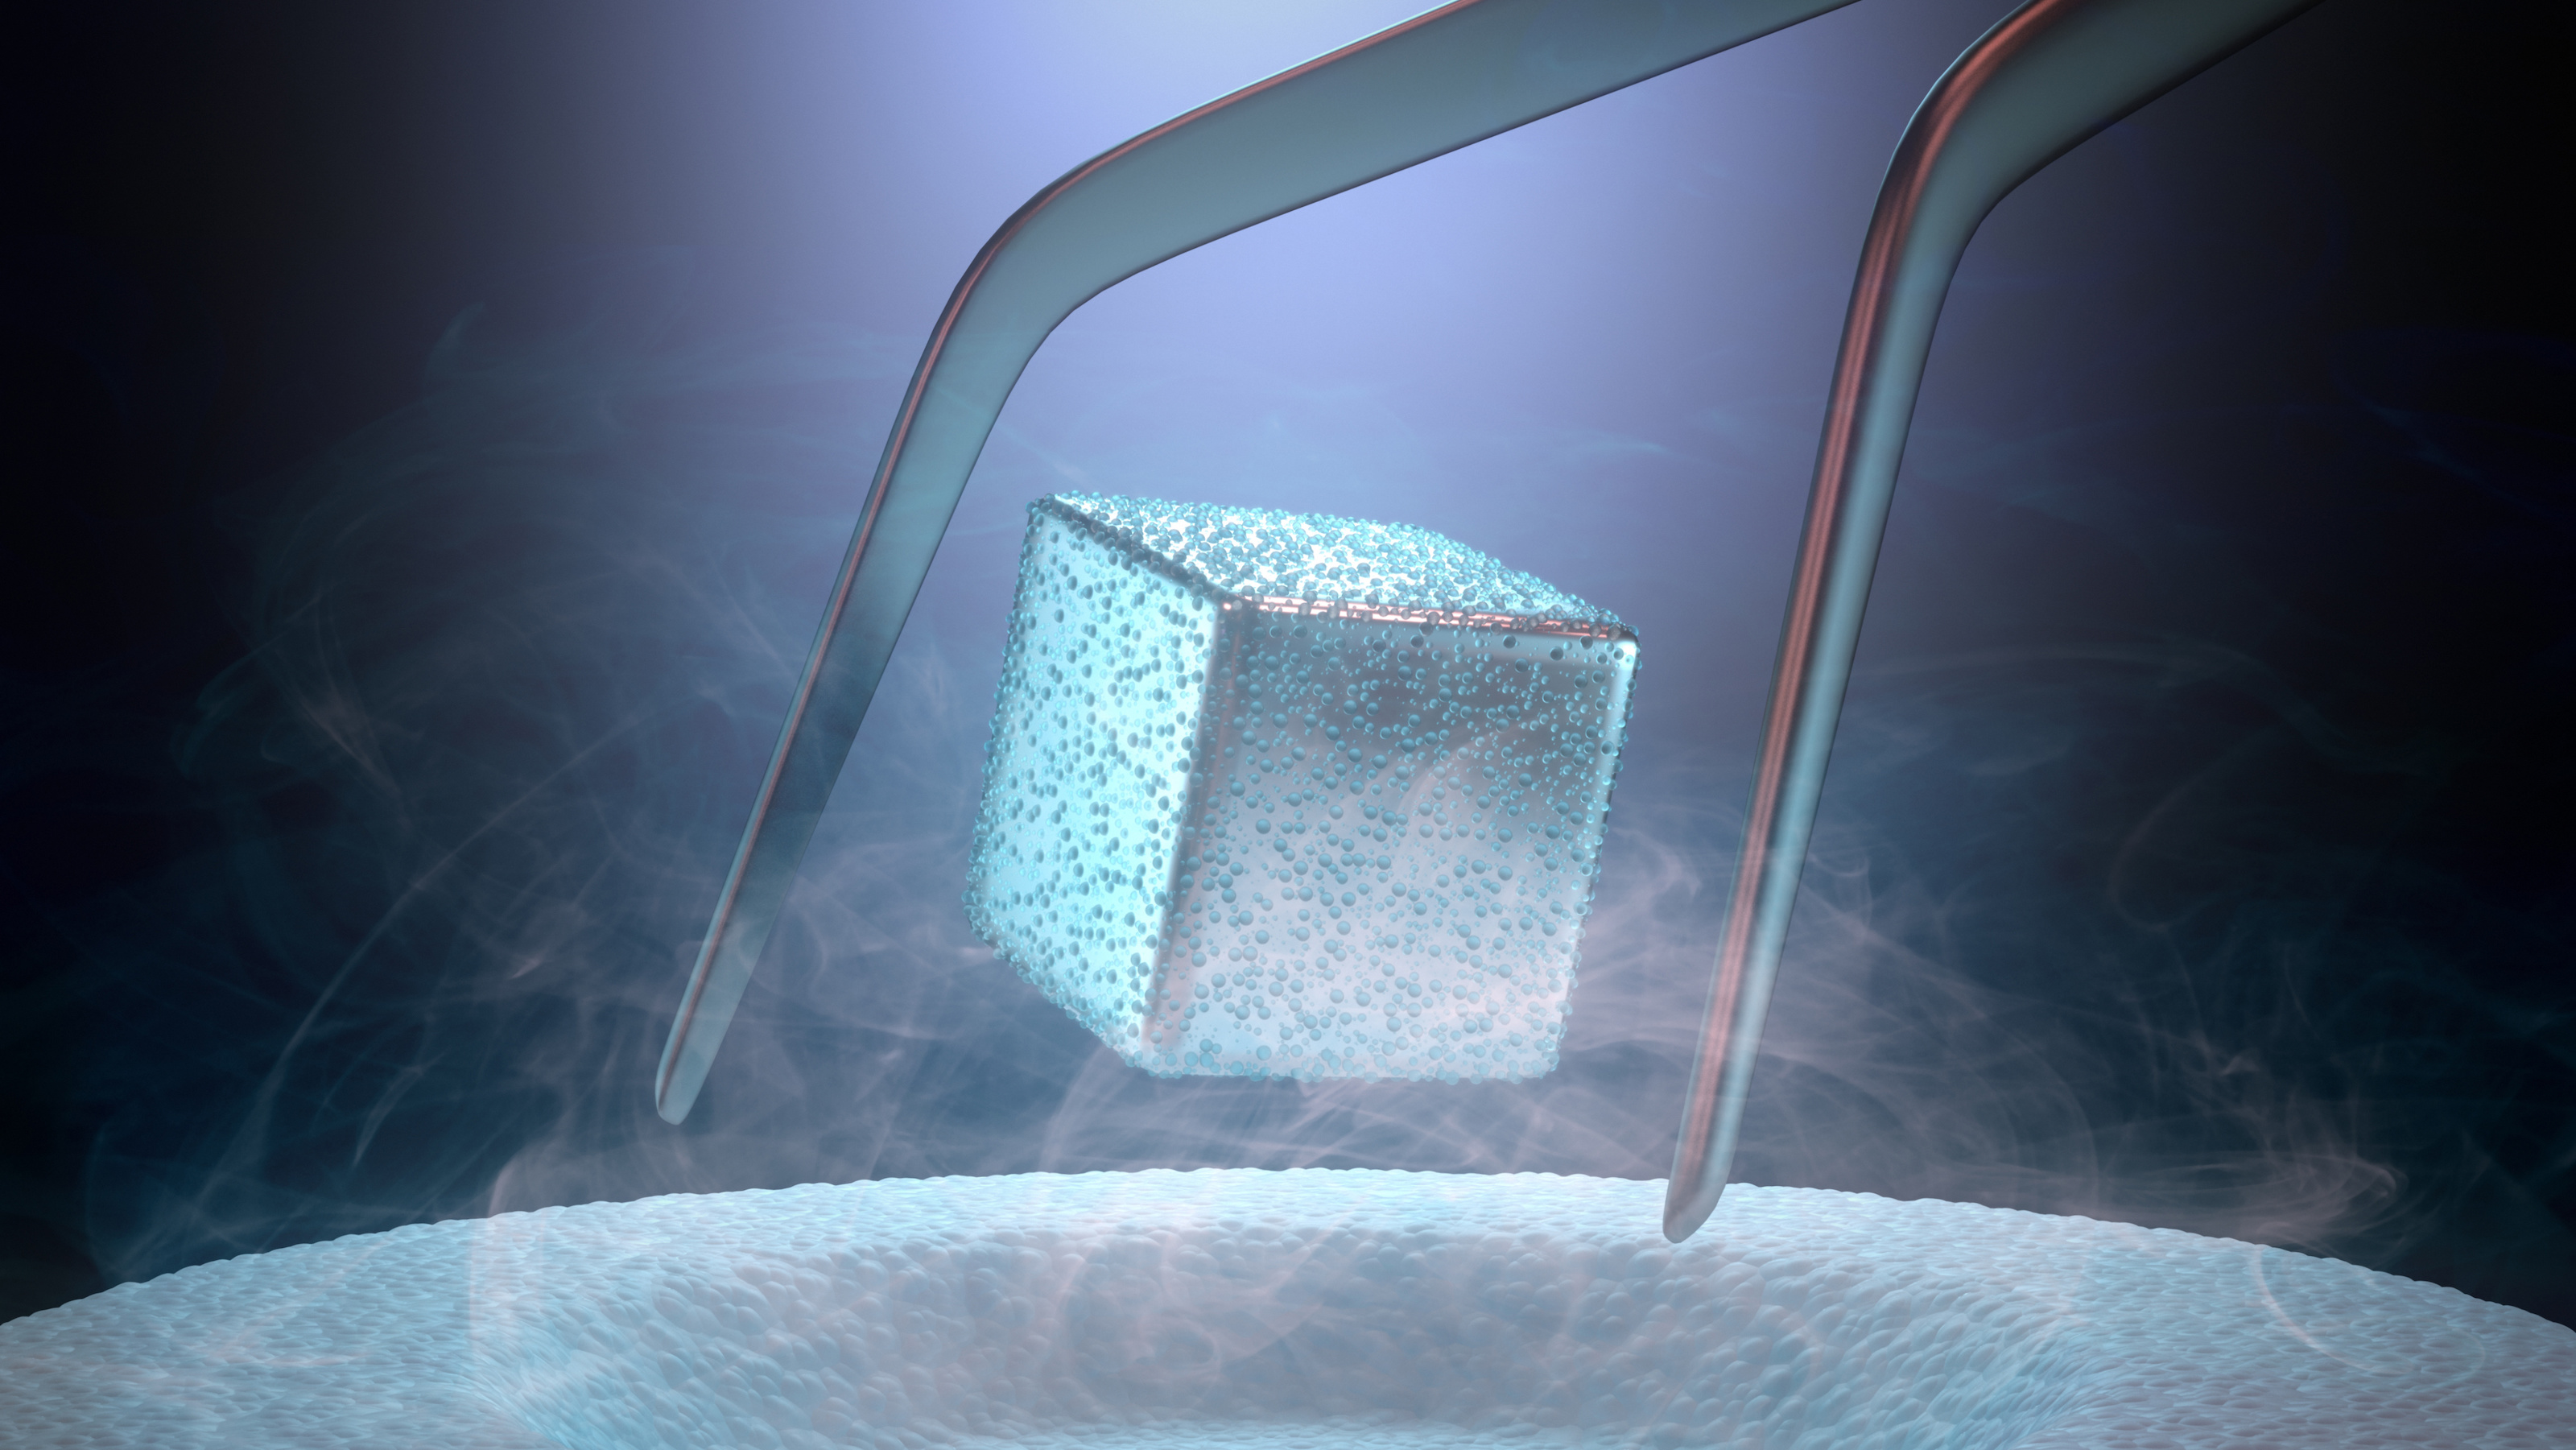 Magnet levitating above a high-temperature superconductor, cooled with liquid nitrogen.